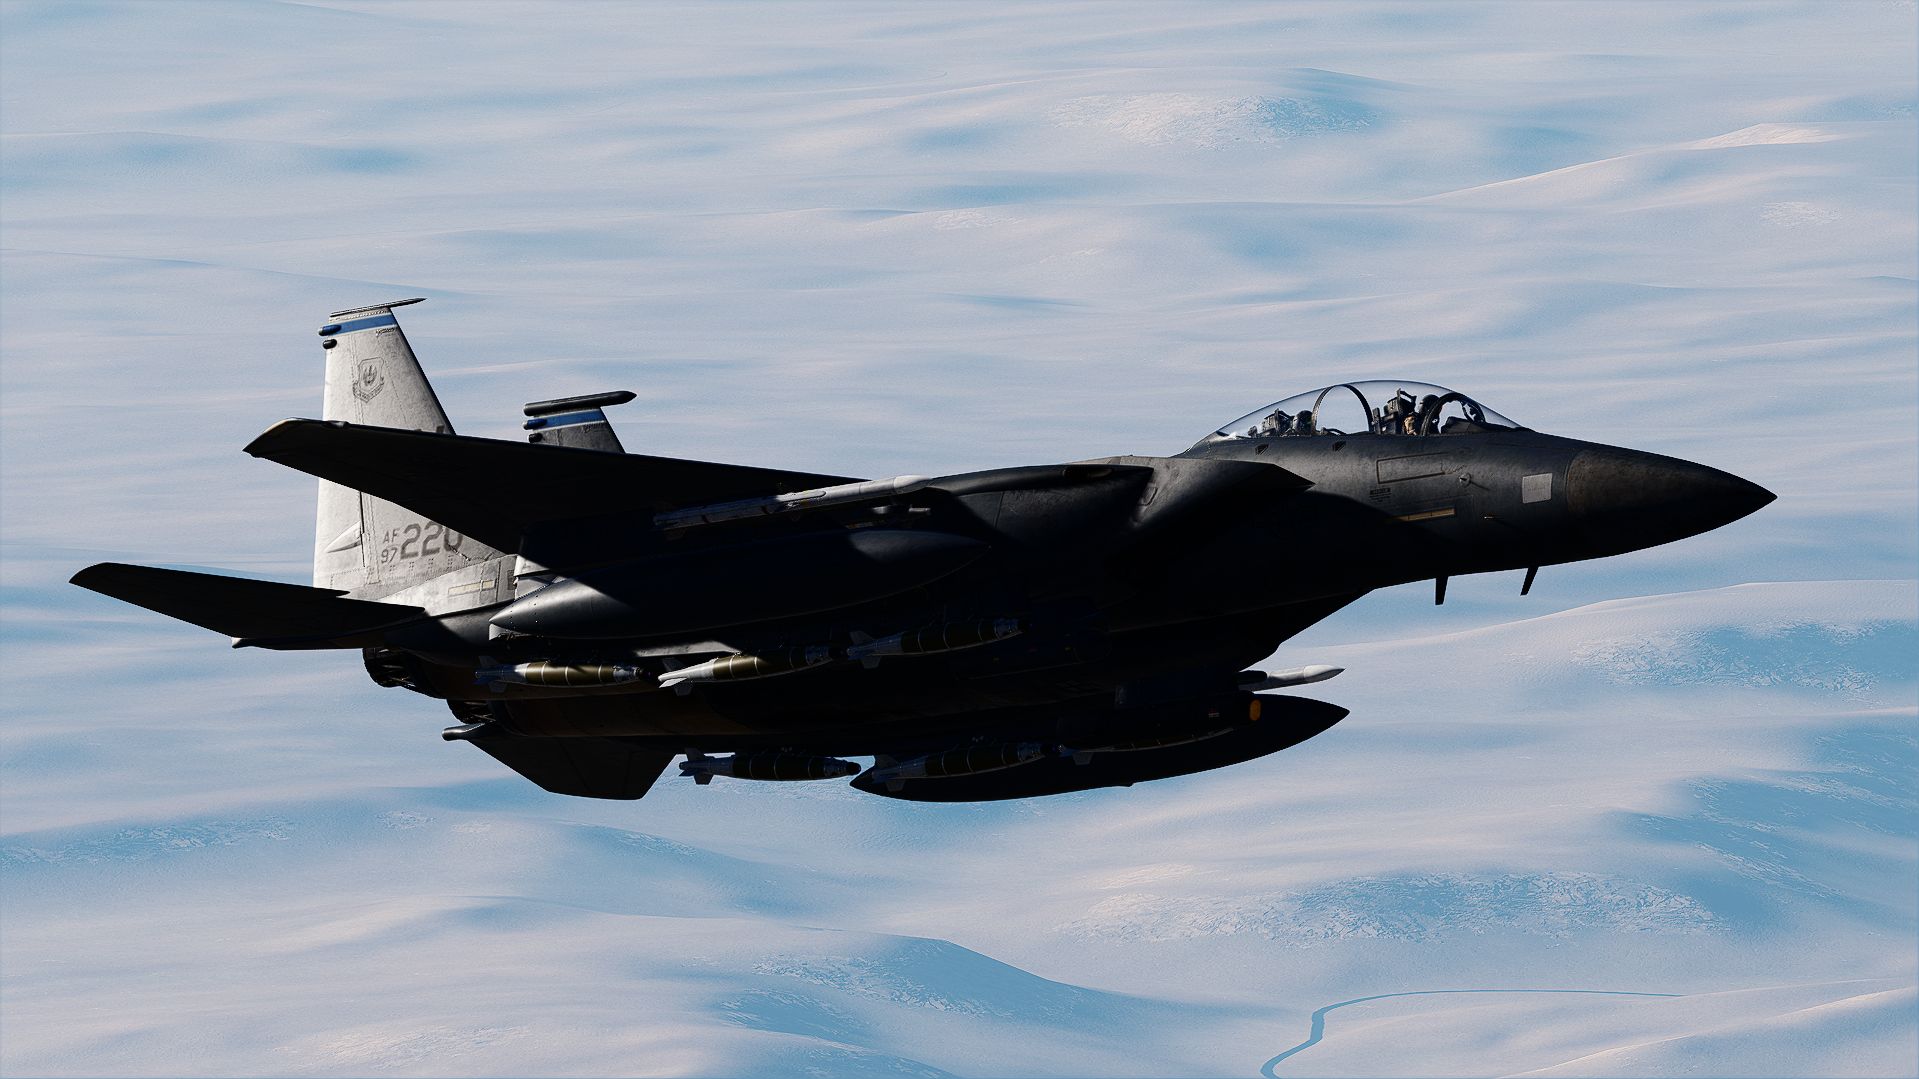 F-15E Strike eagle LN 97-220 "Booze Hound" (REWORKED)